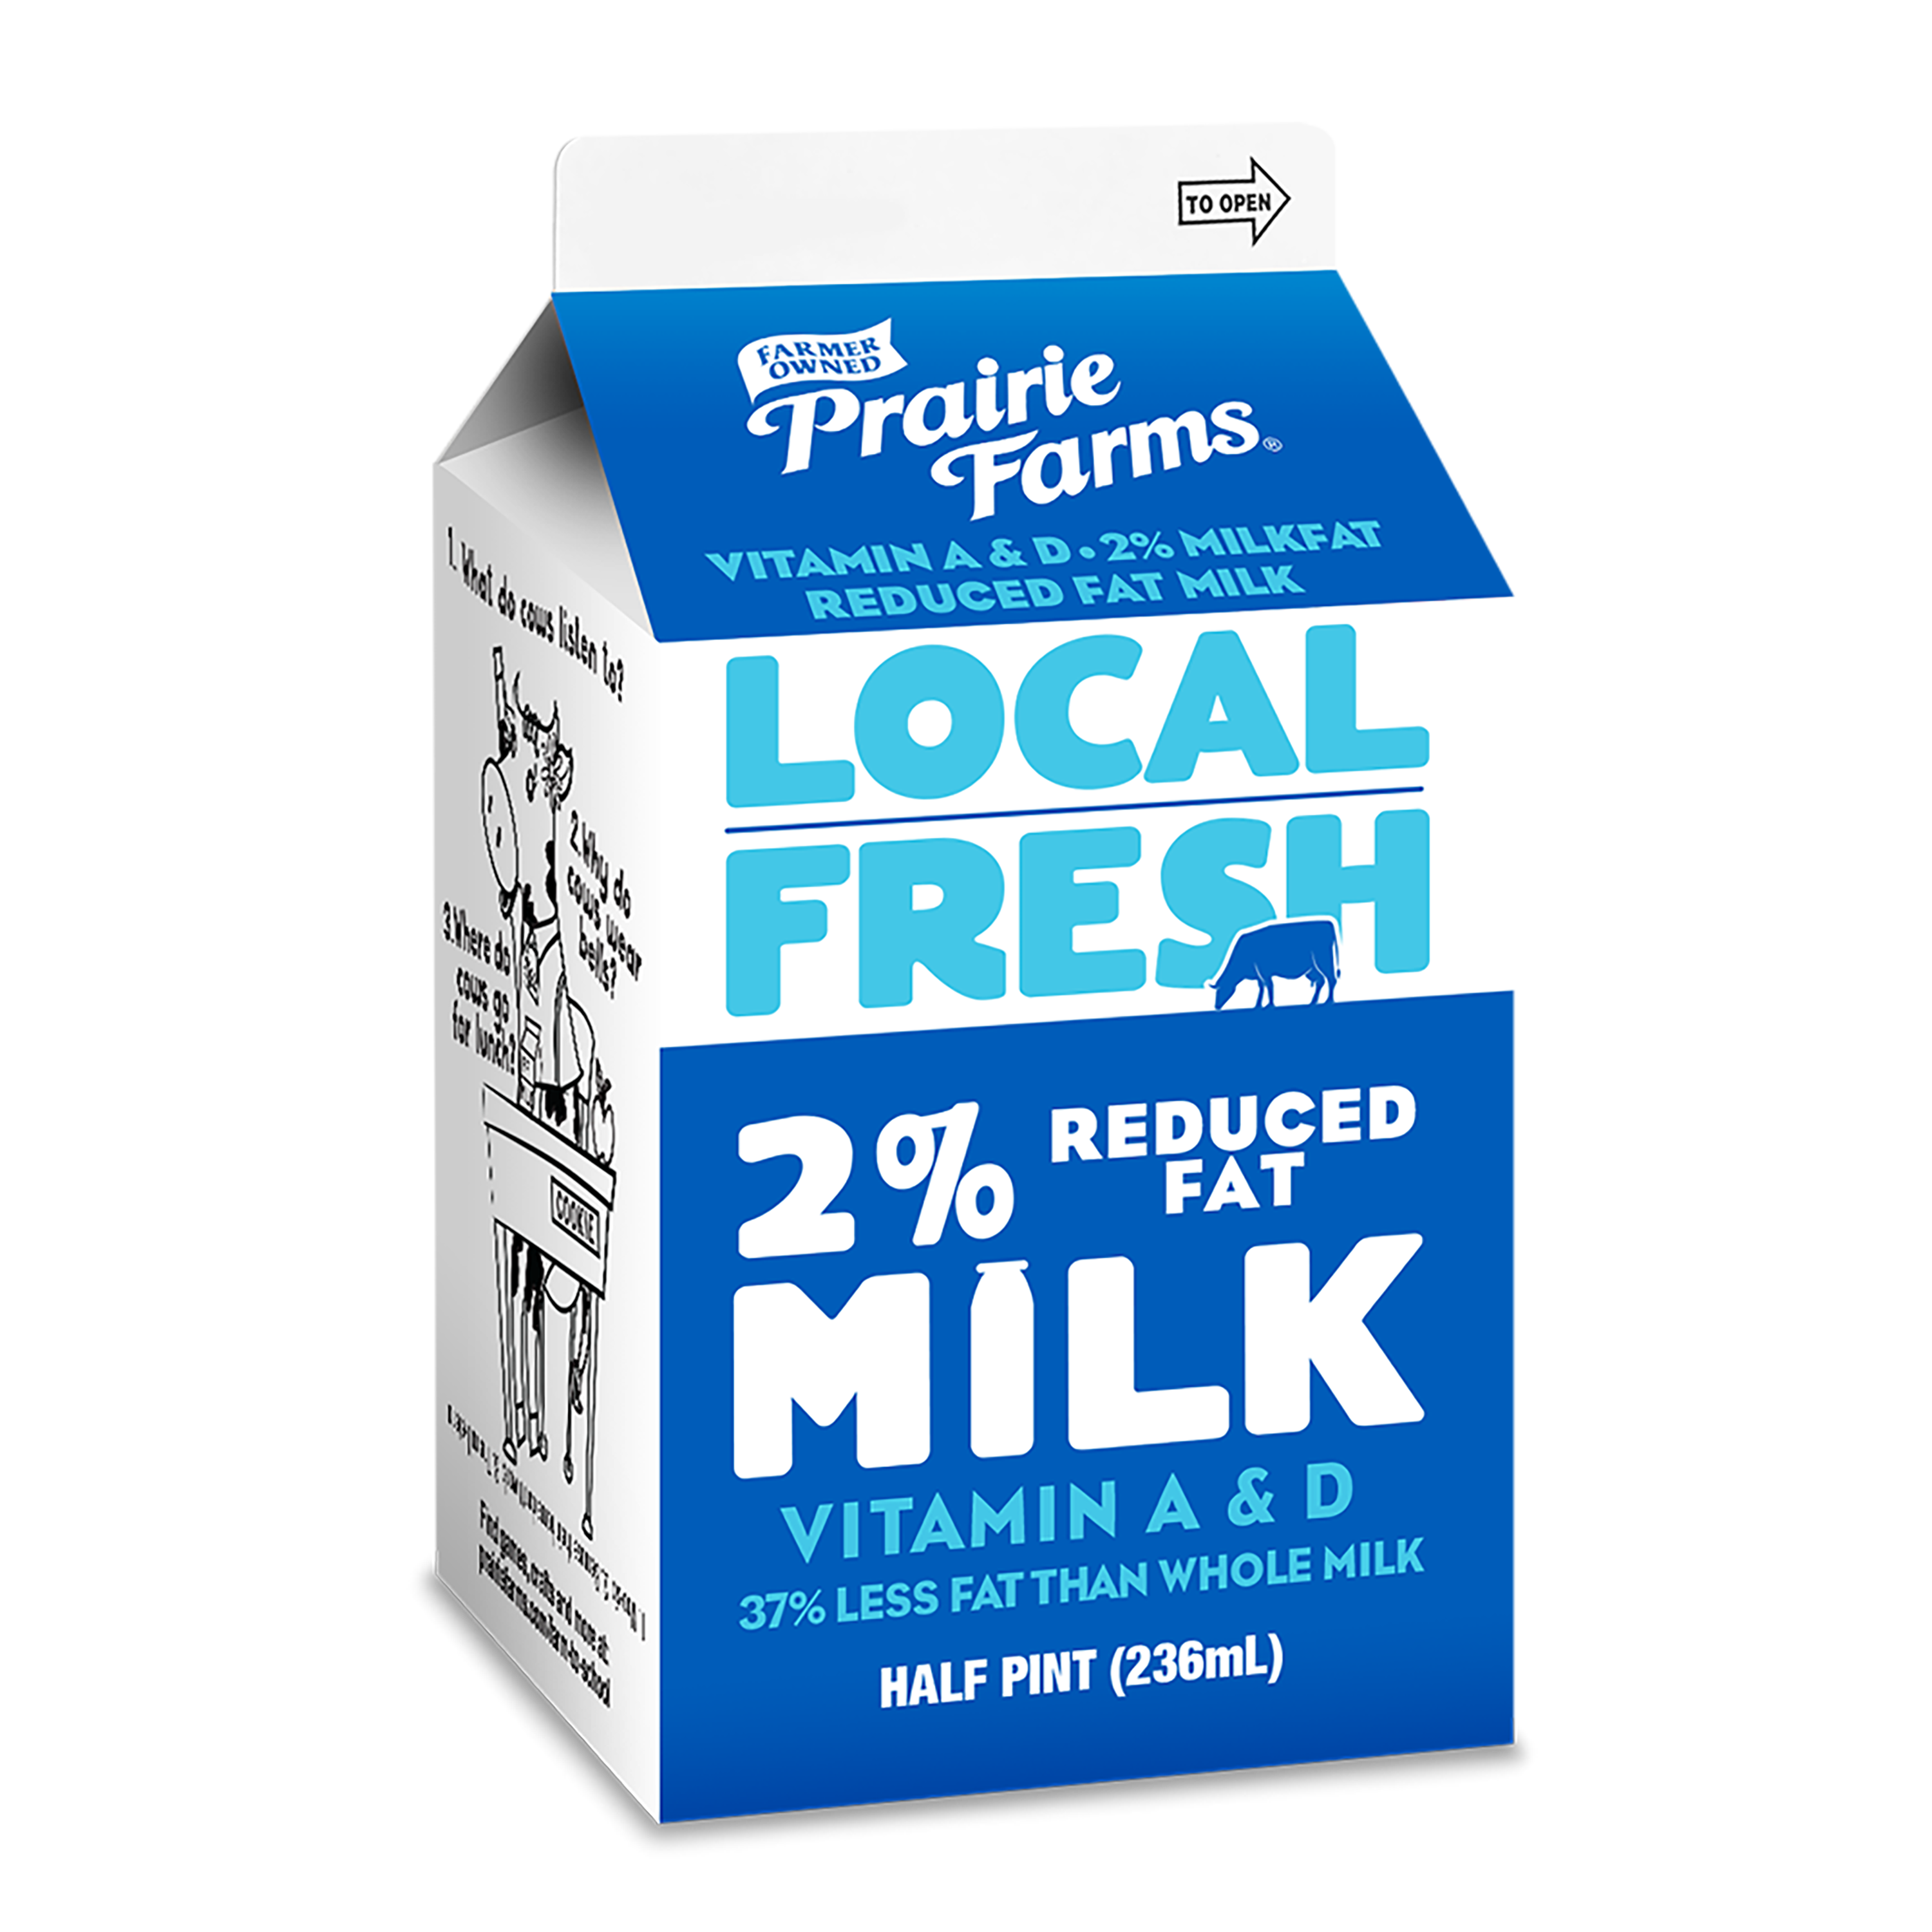 Half & Half - Prairie Farms Dairy, Inc.